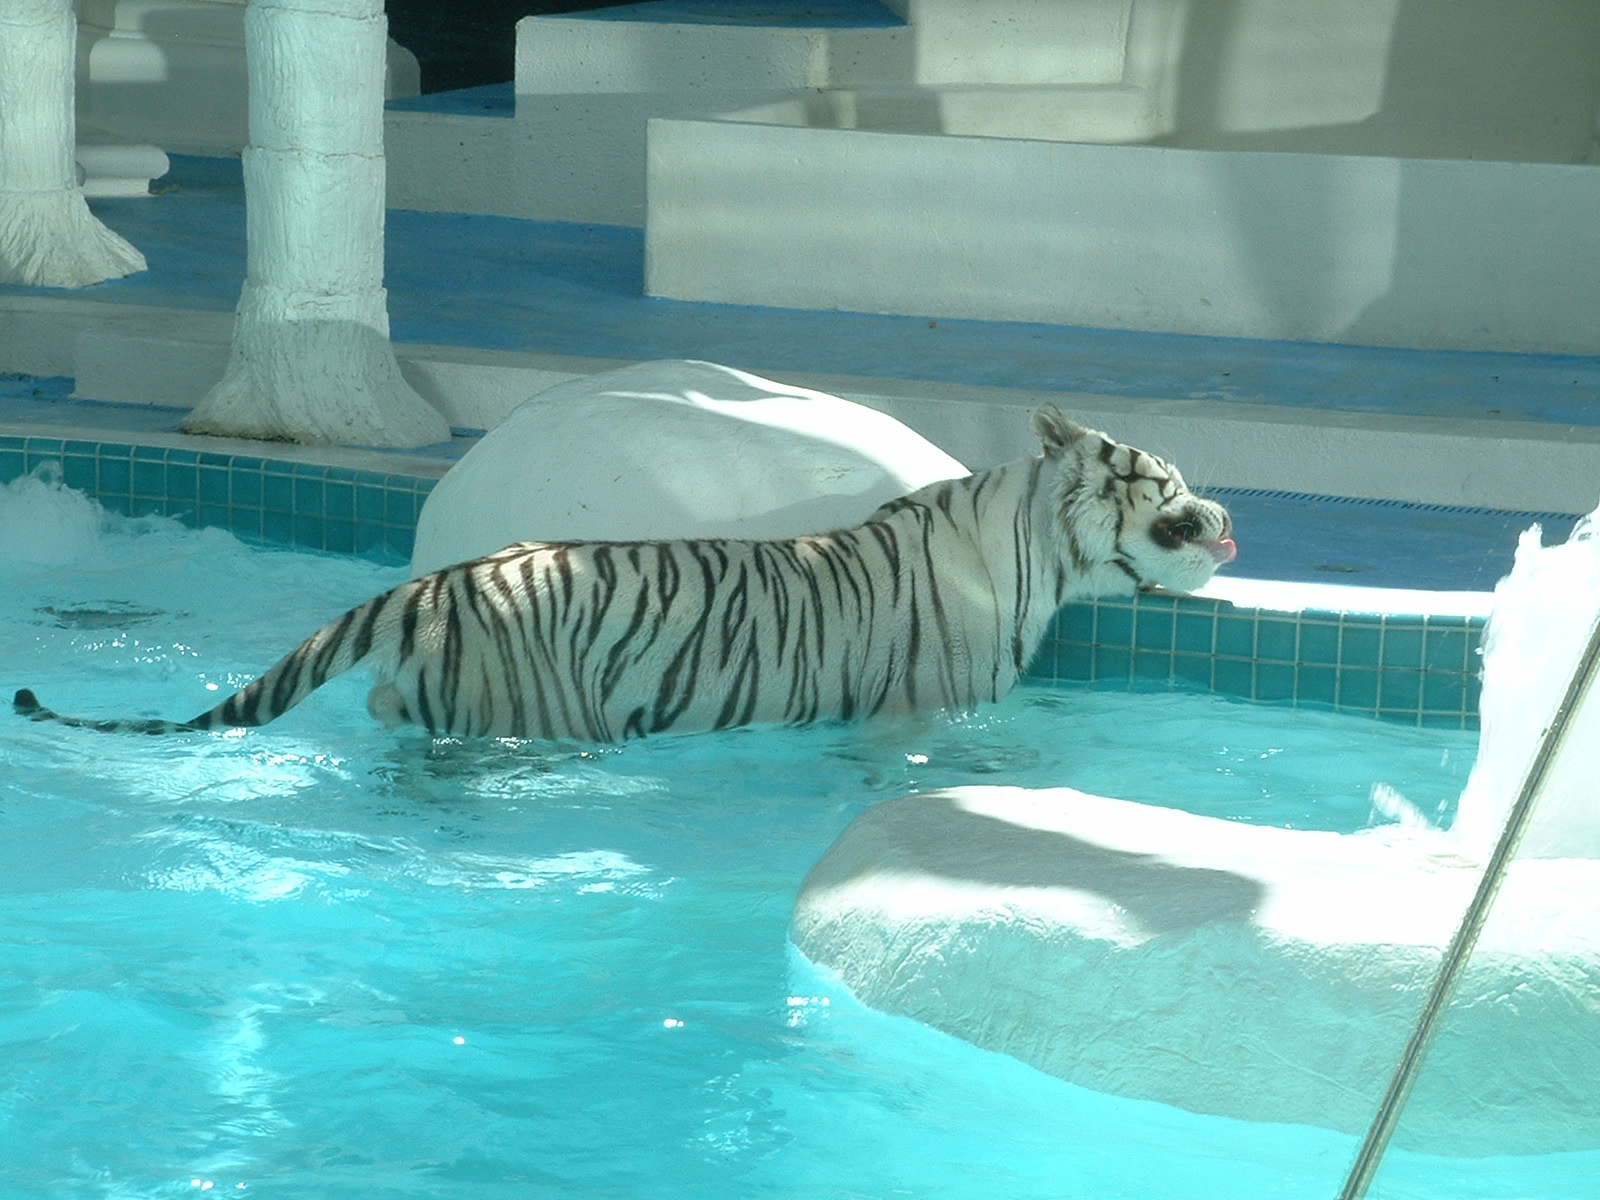 http://2.bp.blogspot.com/-02msQpYe4Uo/Tdo7wzP2CWI/AAAAAAAAAoY/165KVycX2GI/s1600/mirage-white-tiger-habitat-white-tiger-34.jpg